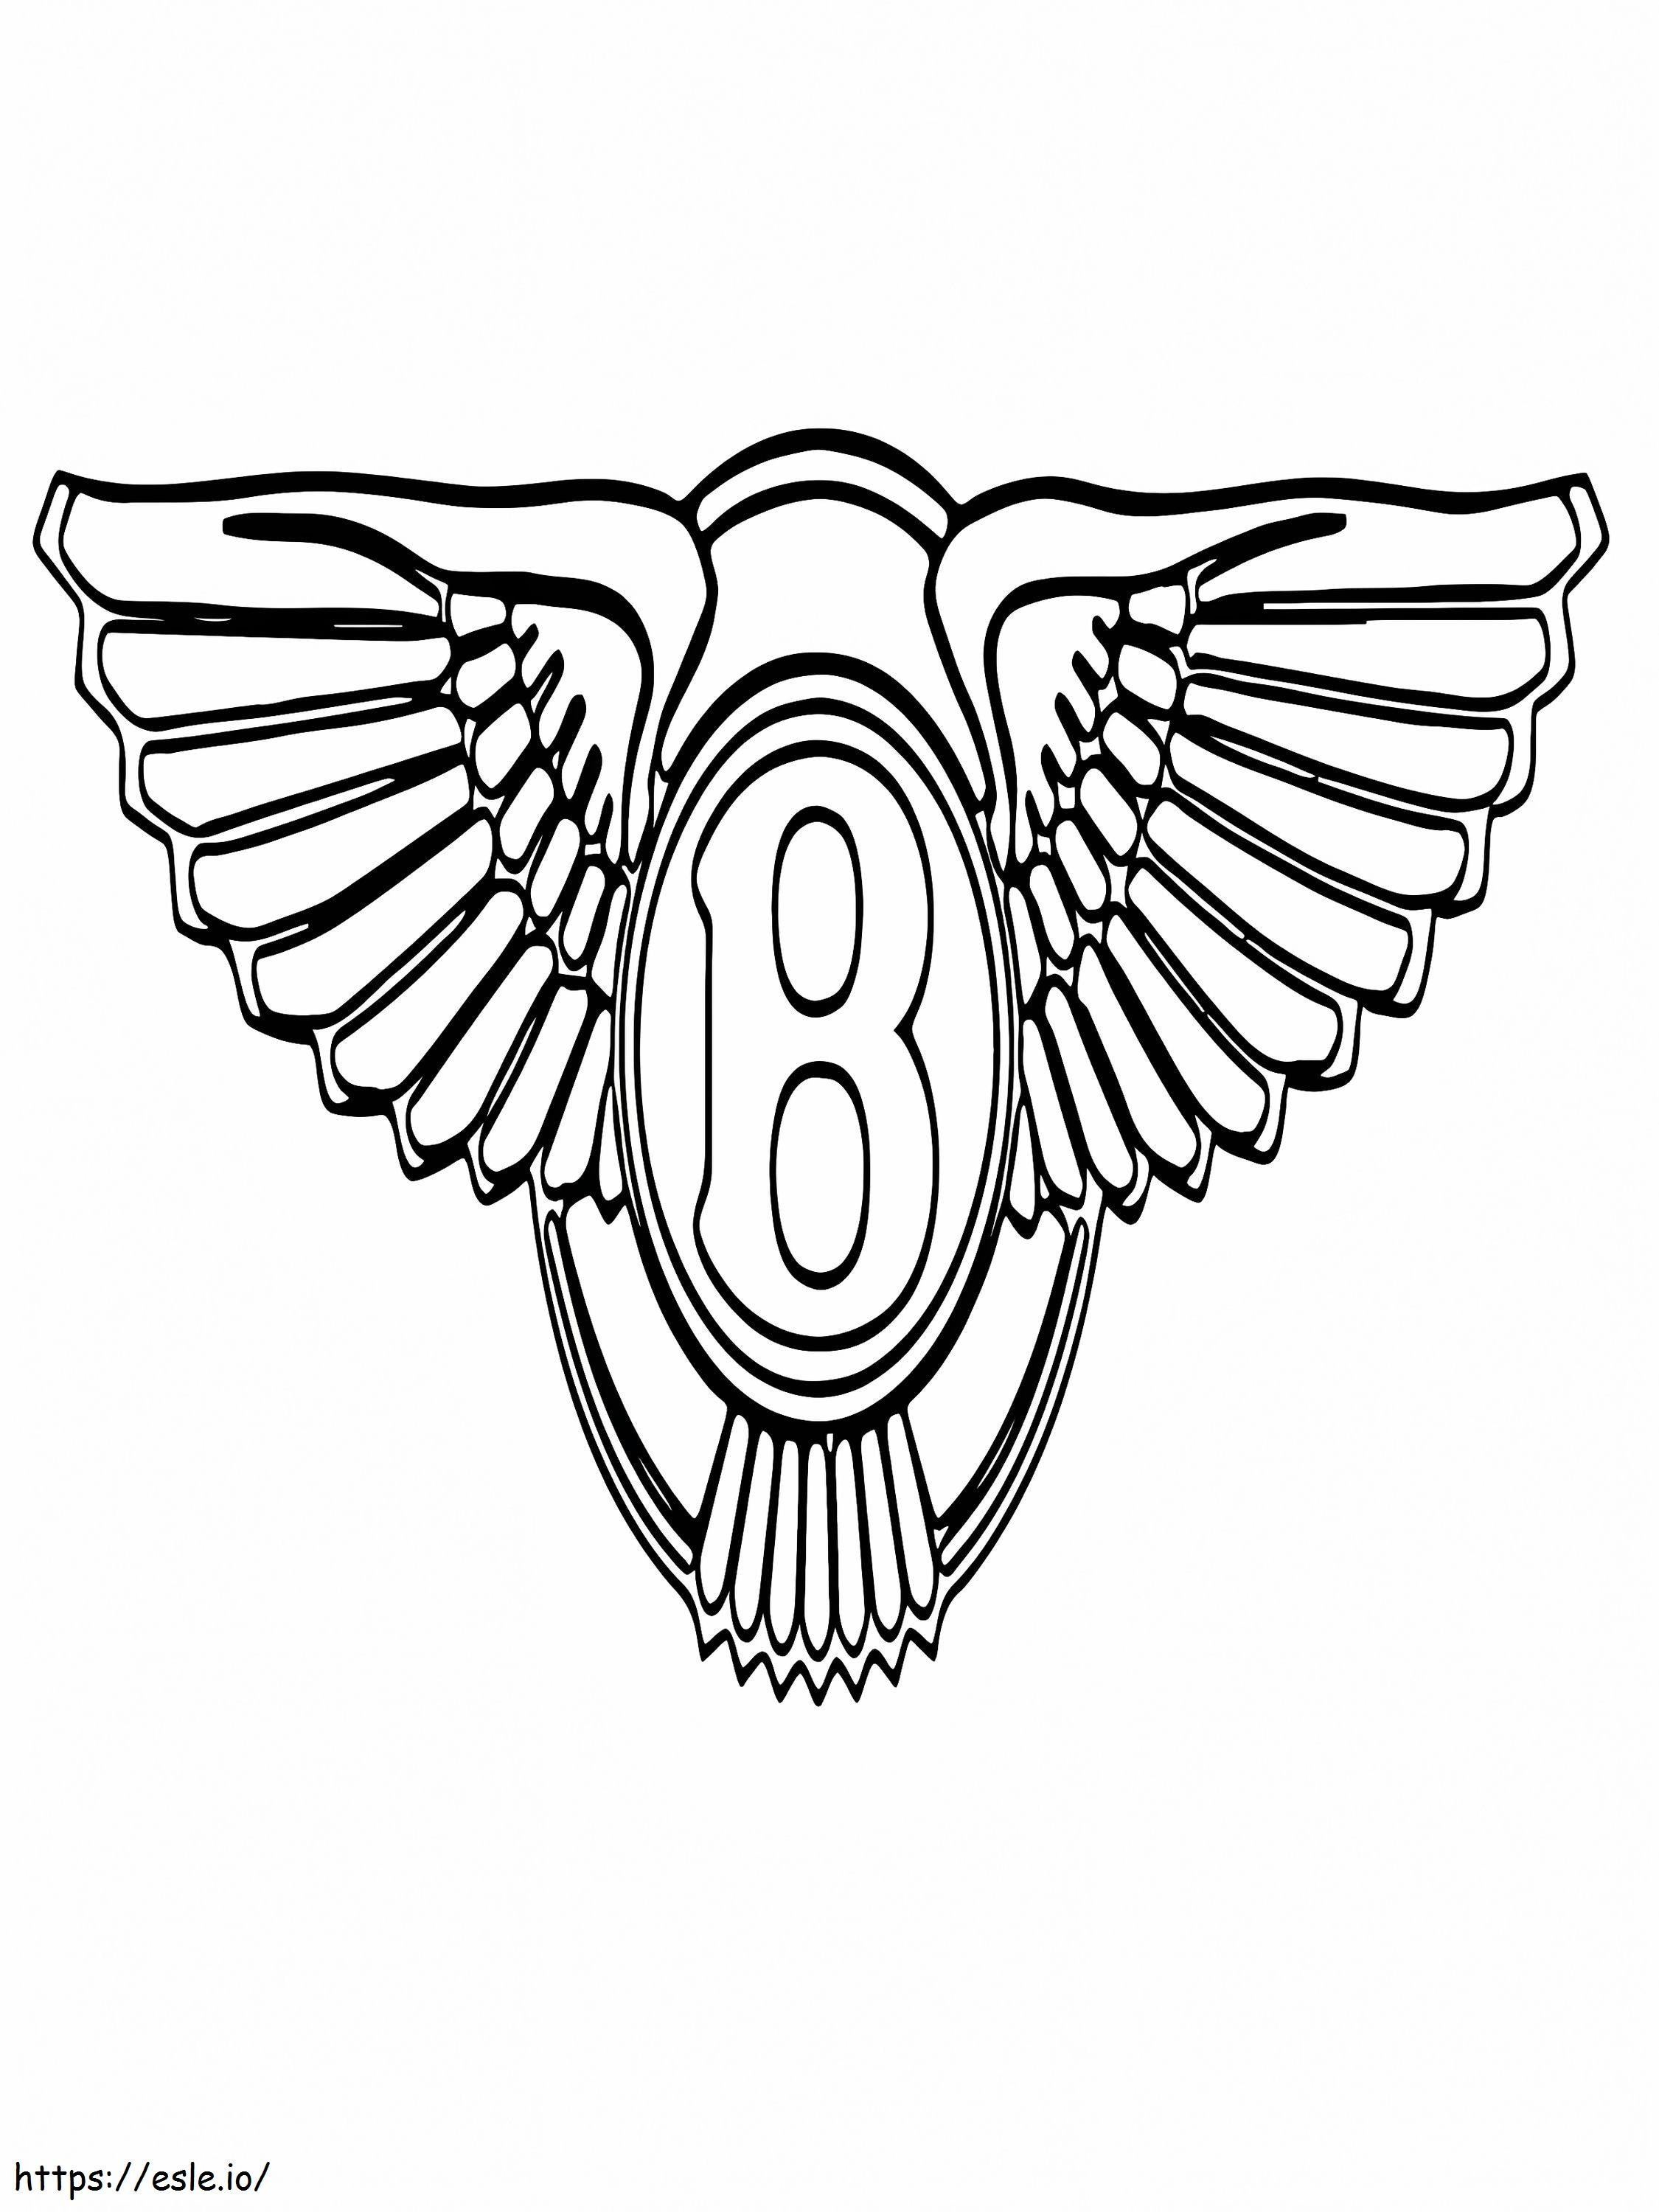 Logo samochodu Bentley kolorowanka